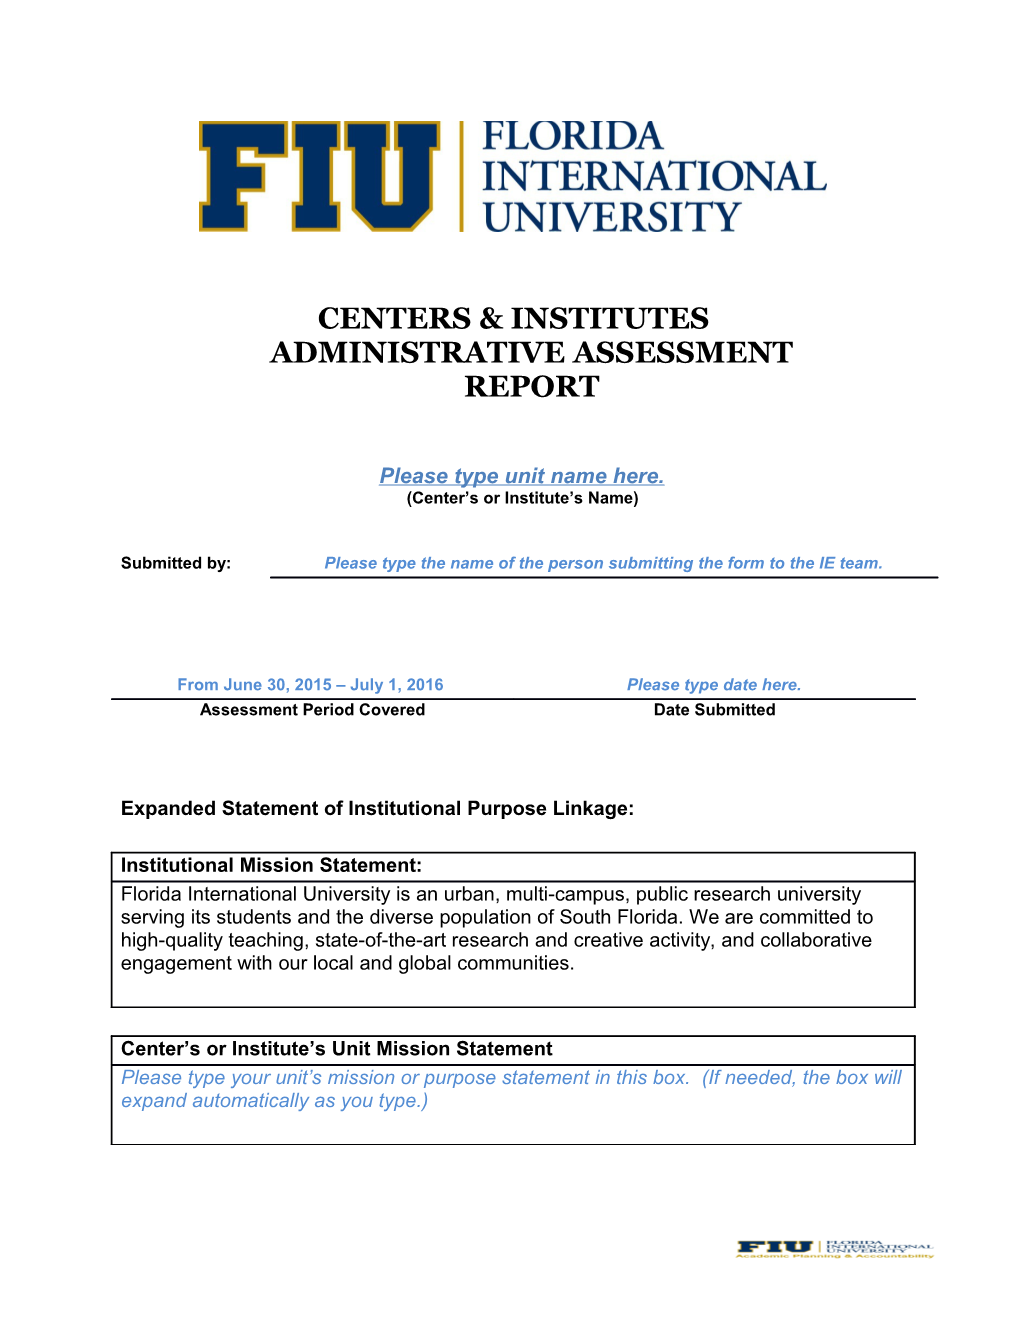 Centers & Institutes Administrative Assessment Report